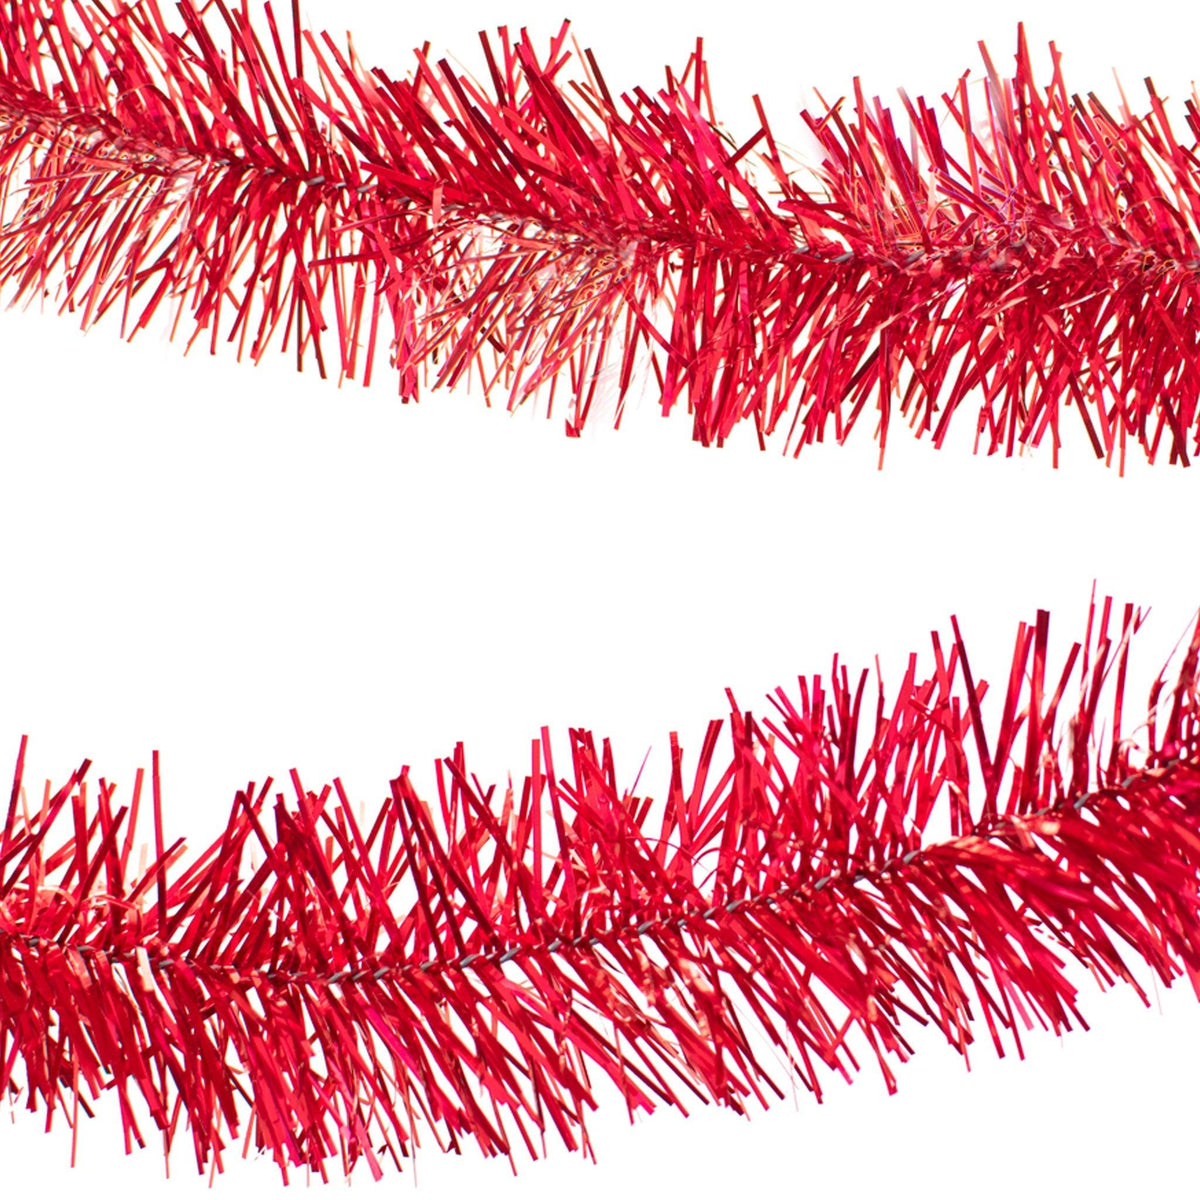 Lee Display's brand new 25ft Shiny Metallic Red Tinsel Garlands and Fringe Embellishments on sale at leedisplay.com